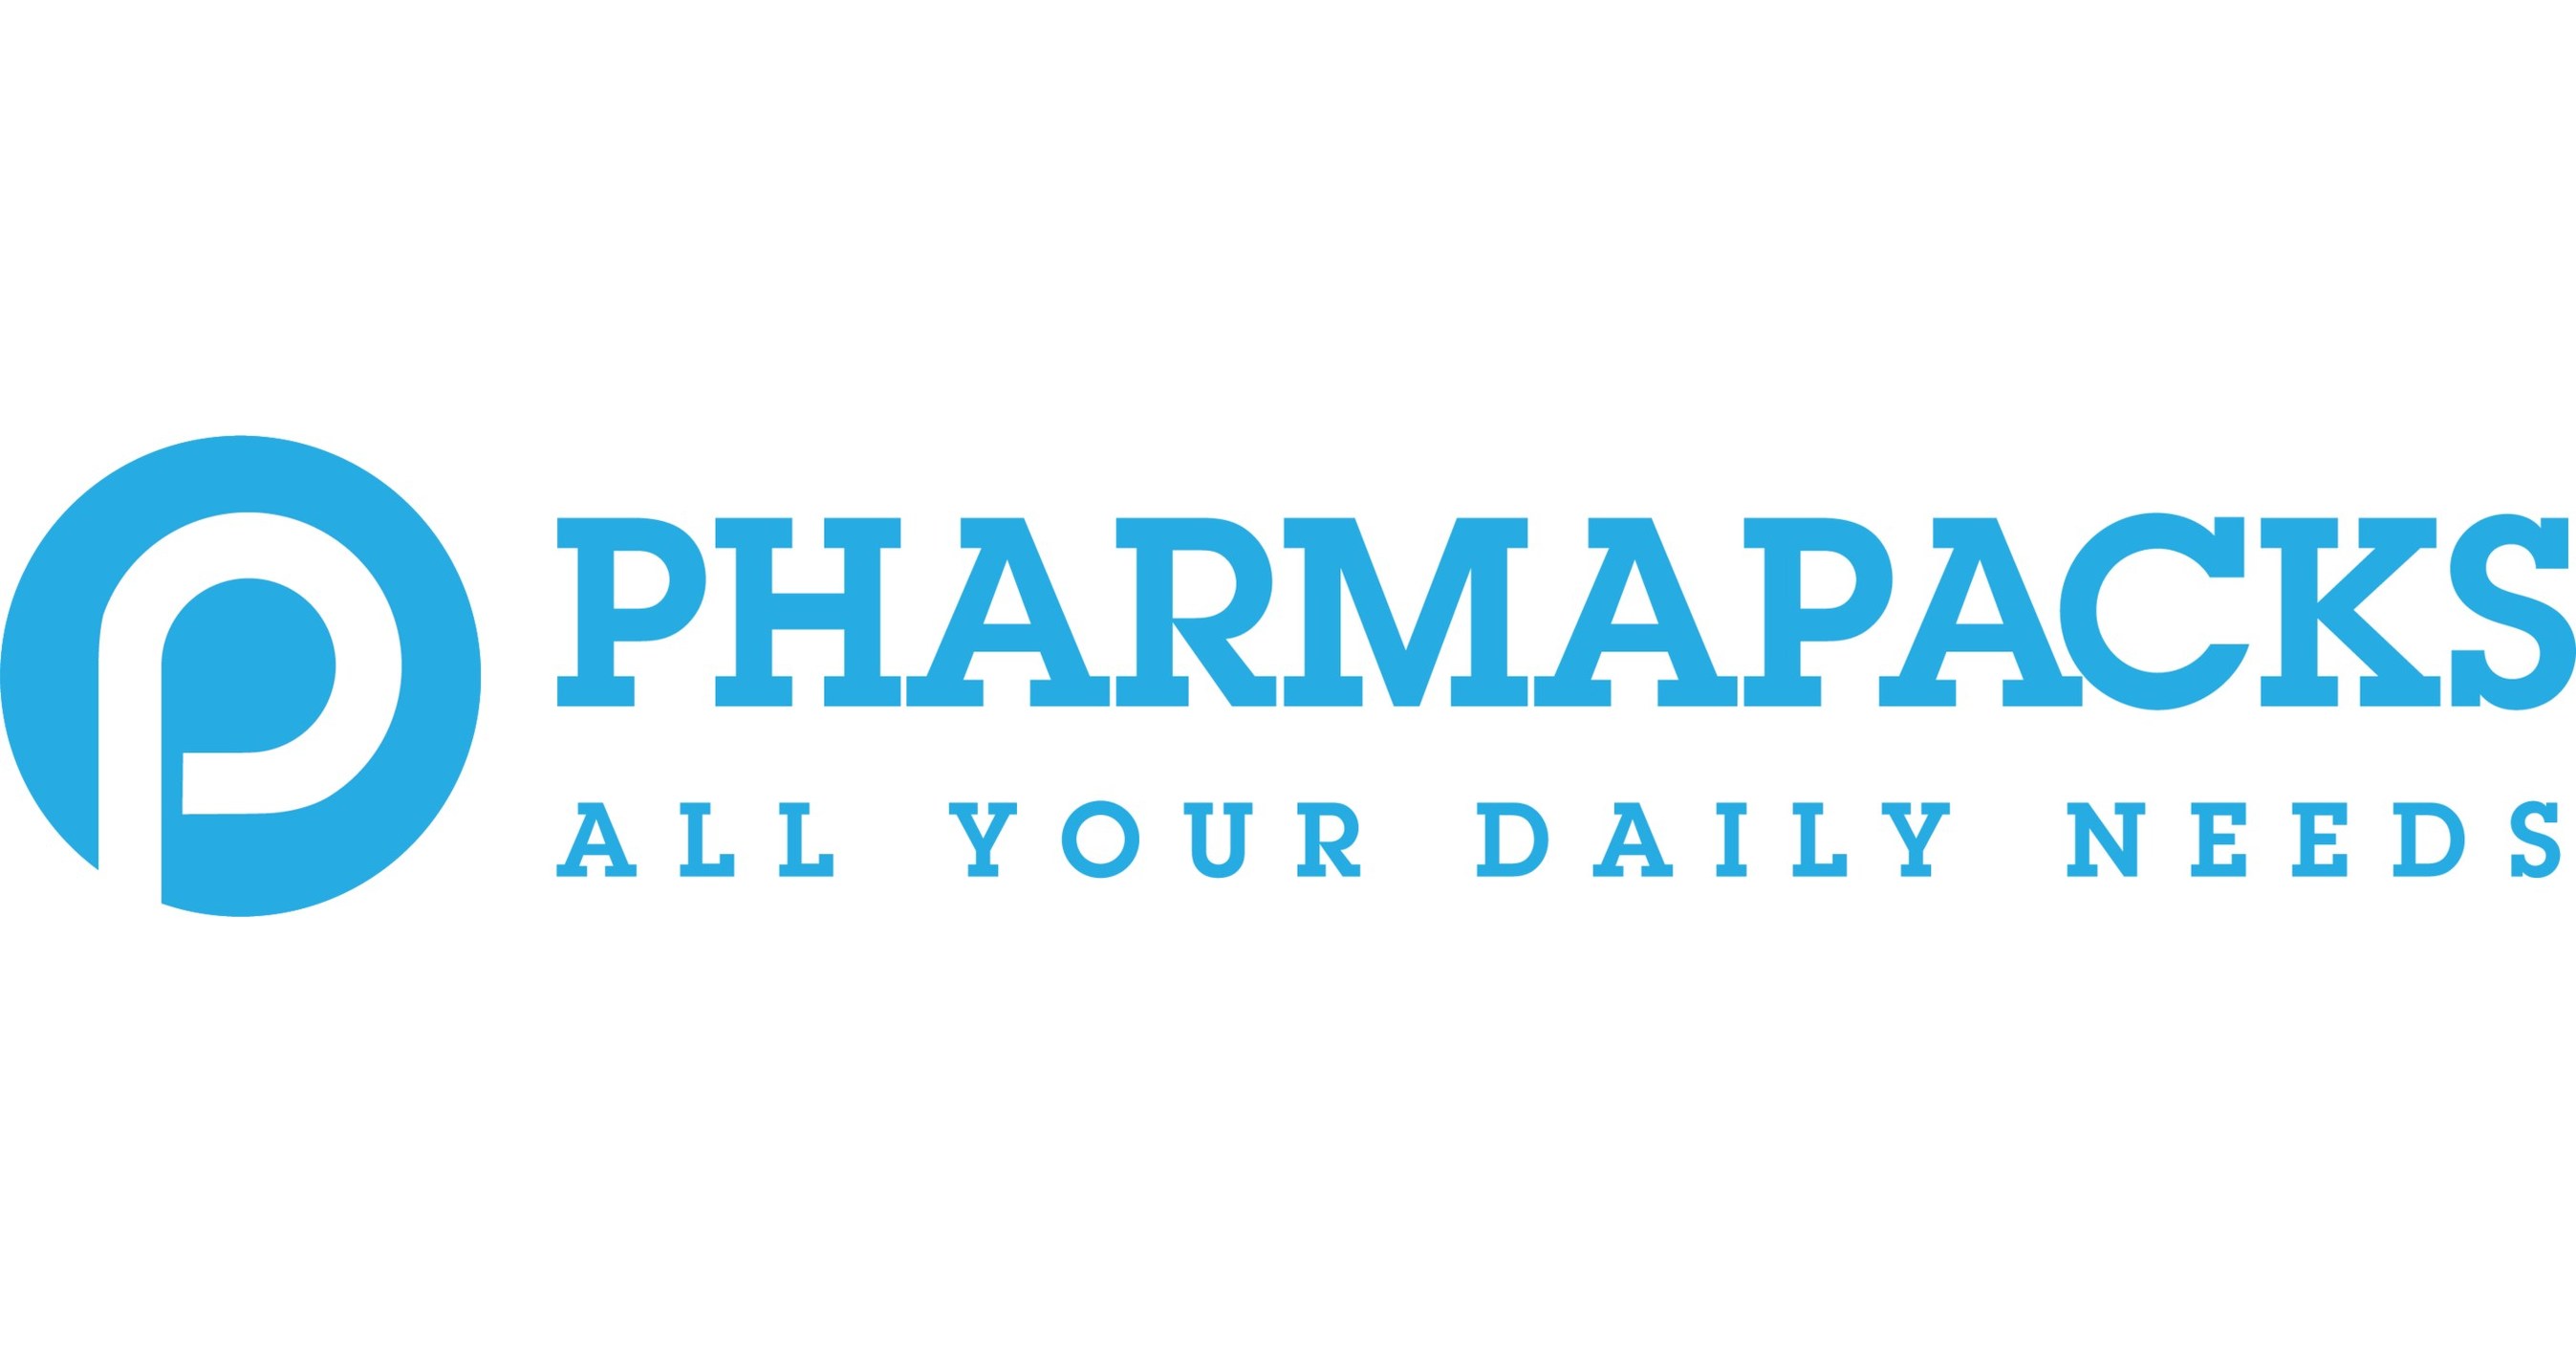 Pharmapacks Raises 32.5 Million to Fund Expansion, Automation and